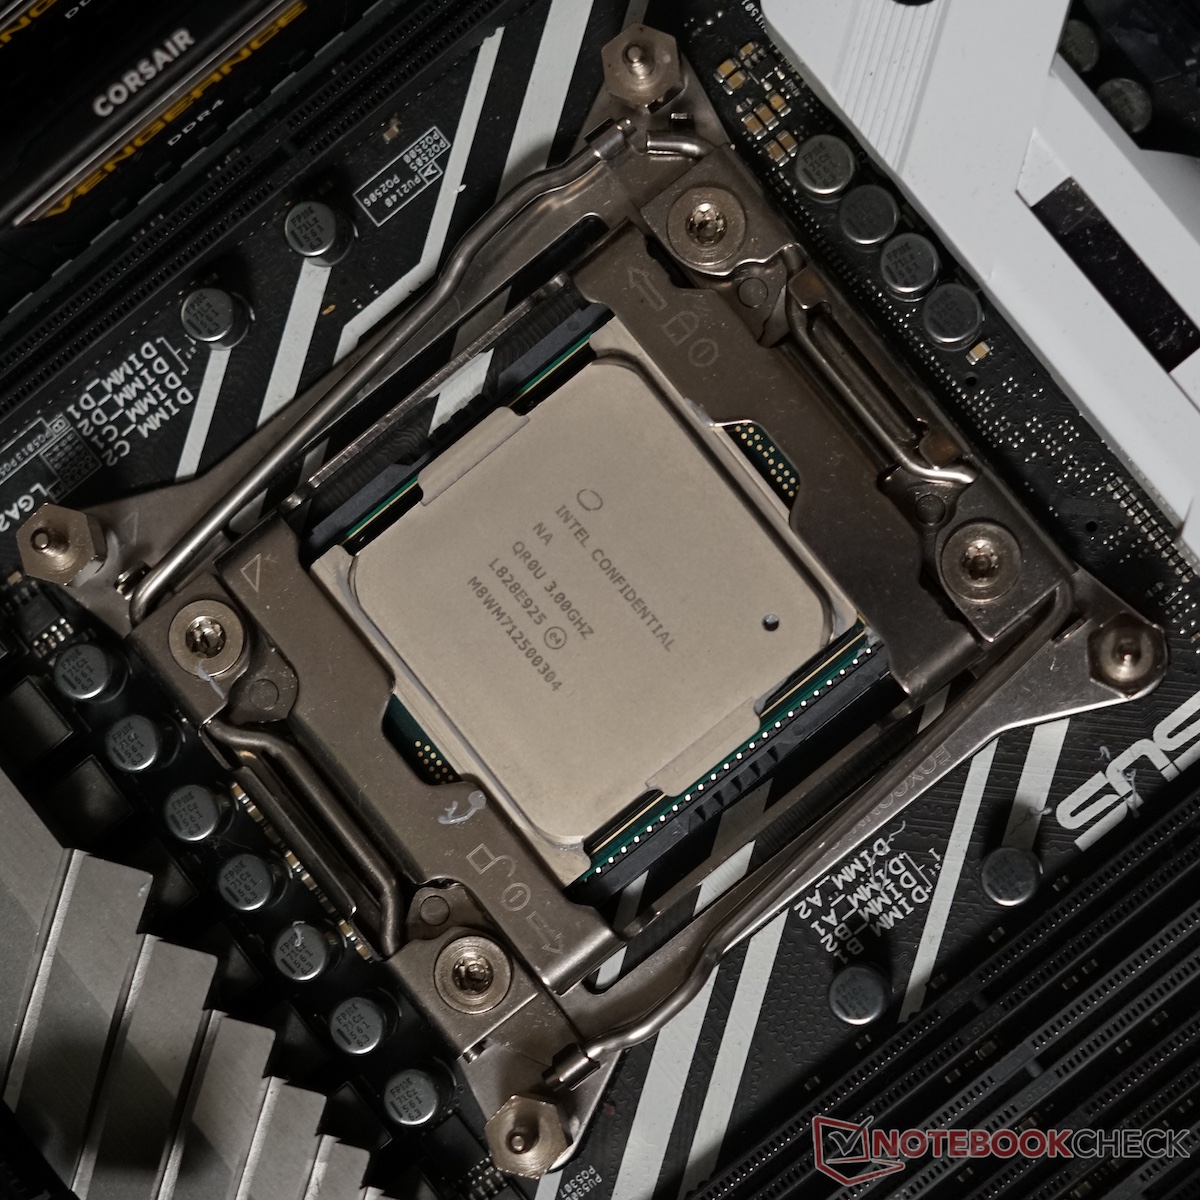 Intel Core i9-9980XE Desktop Processor - Benchmarks and Specs